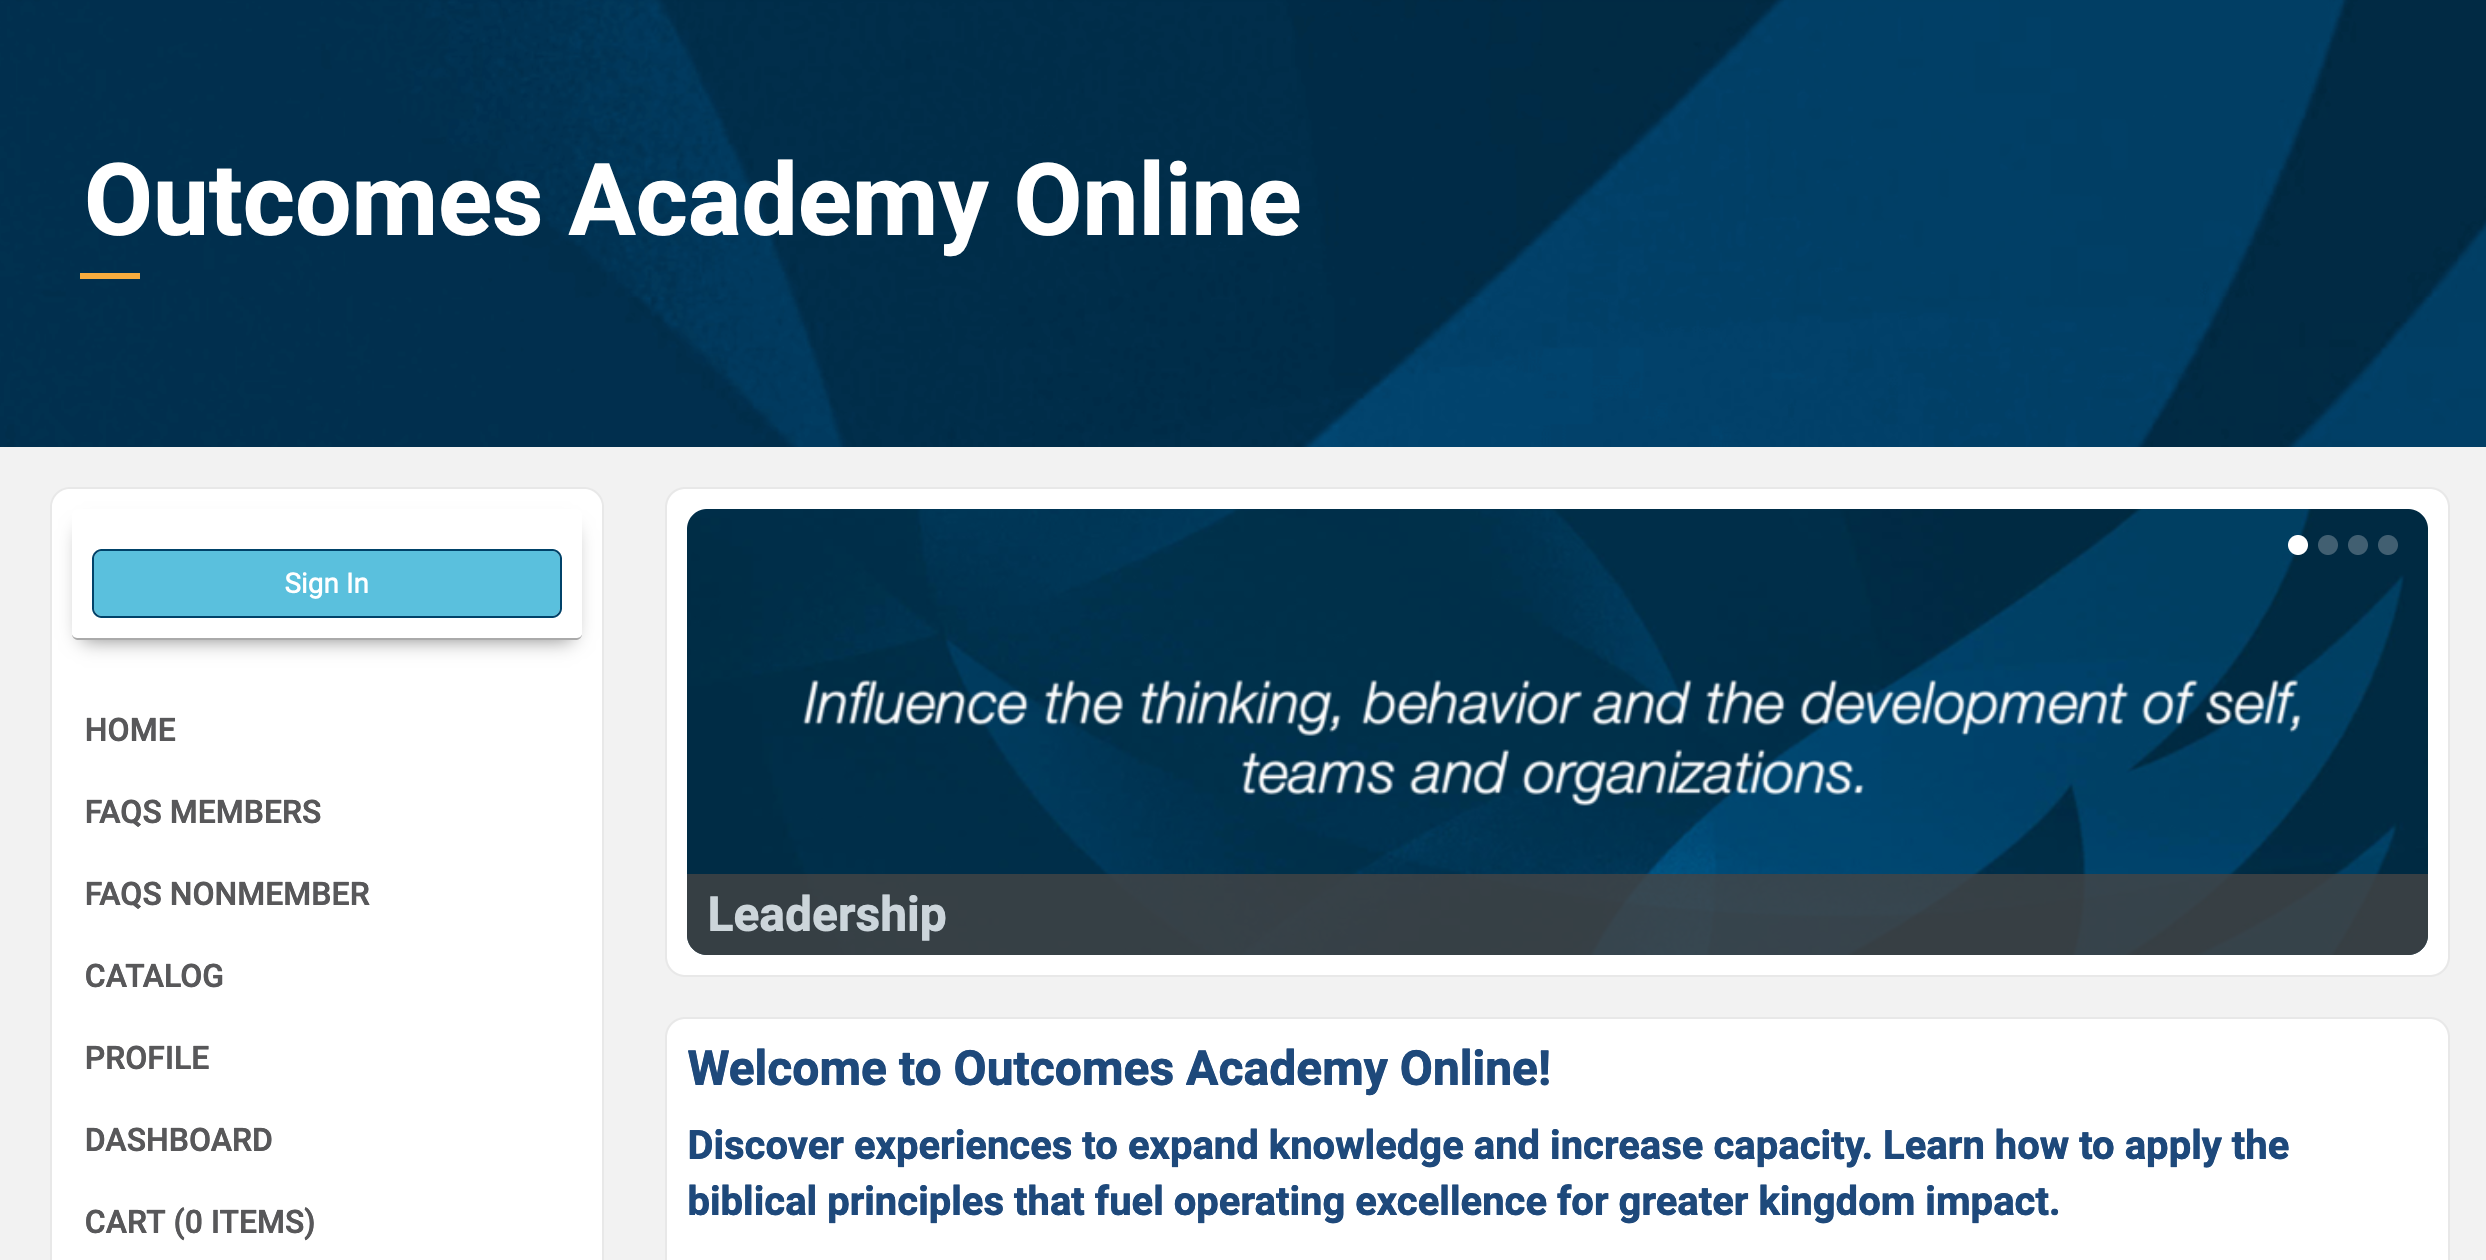 Outvomrd Academy Online